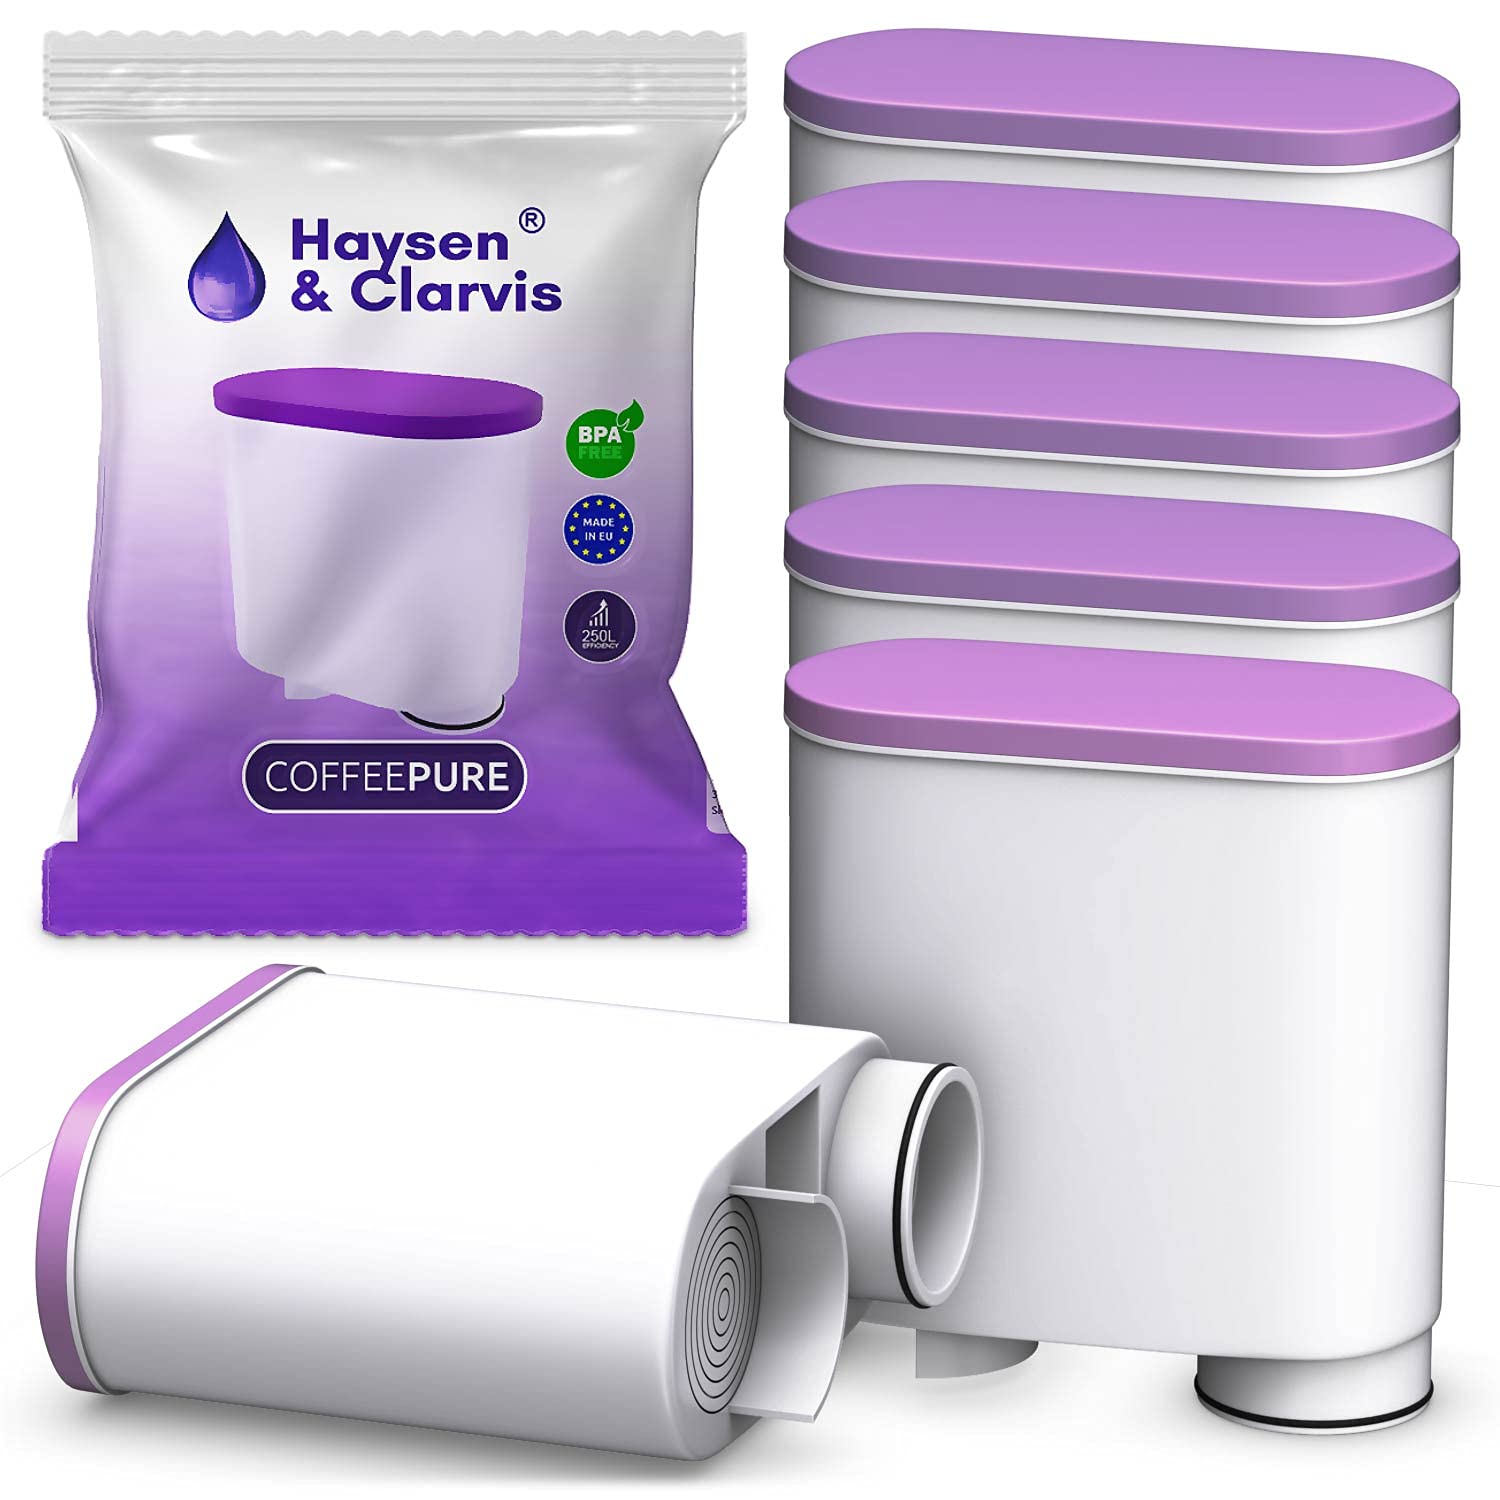 Haysen & Clarvis Wasserfilter kompatibel mit Philips CoffeePure AquaClean Kalkfilter, Wasserfilter kompatibel mit Saeco und mit Philips Kaffeevollautomaten (6 Pack)